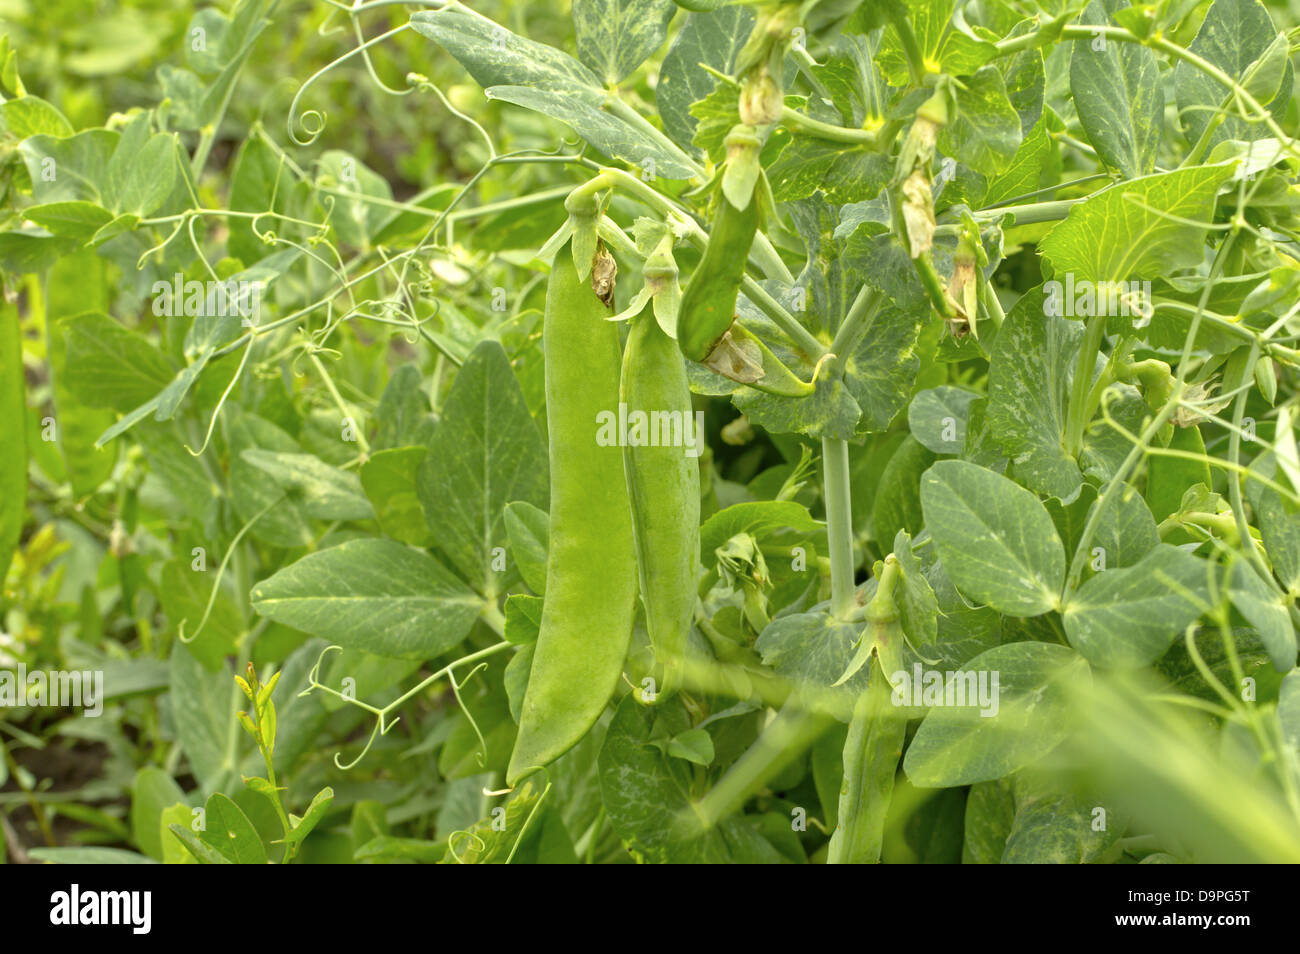 Young green peas in the garden. Stock Photo